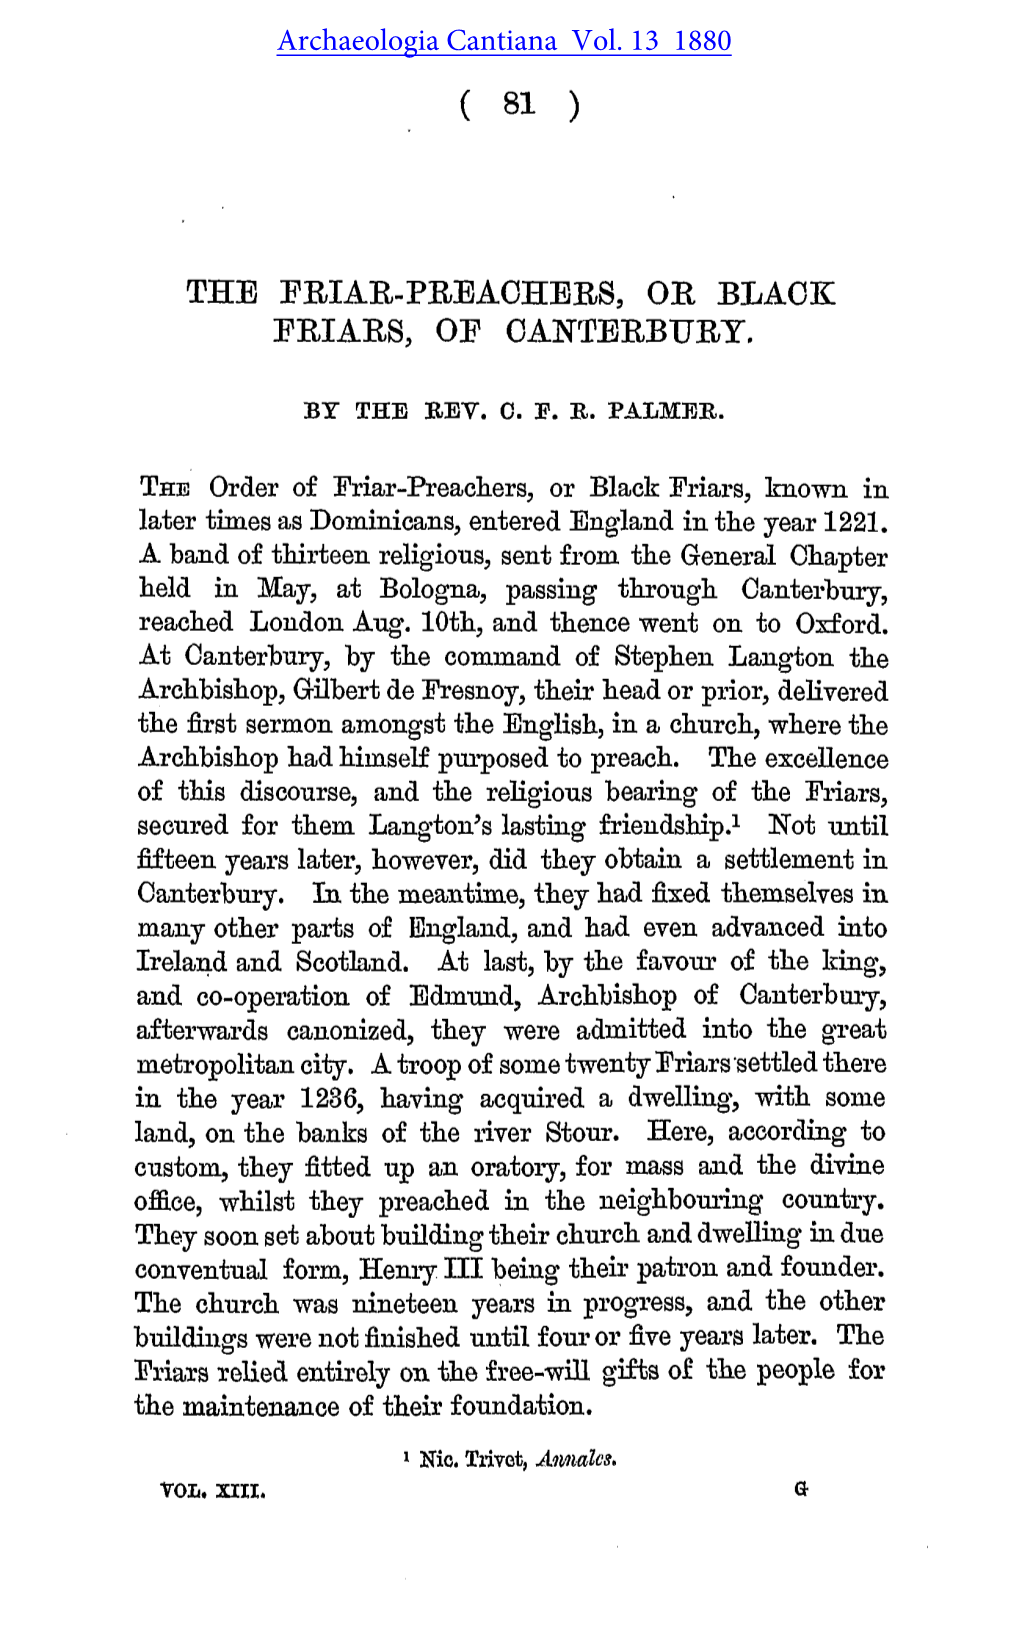 The Friar-Preachers Or Black Friars of Canterbury